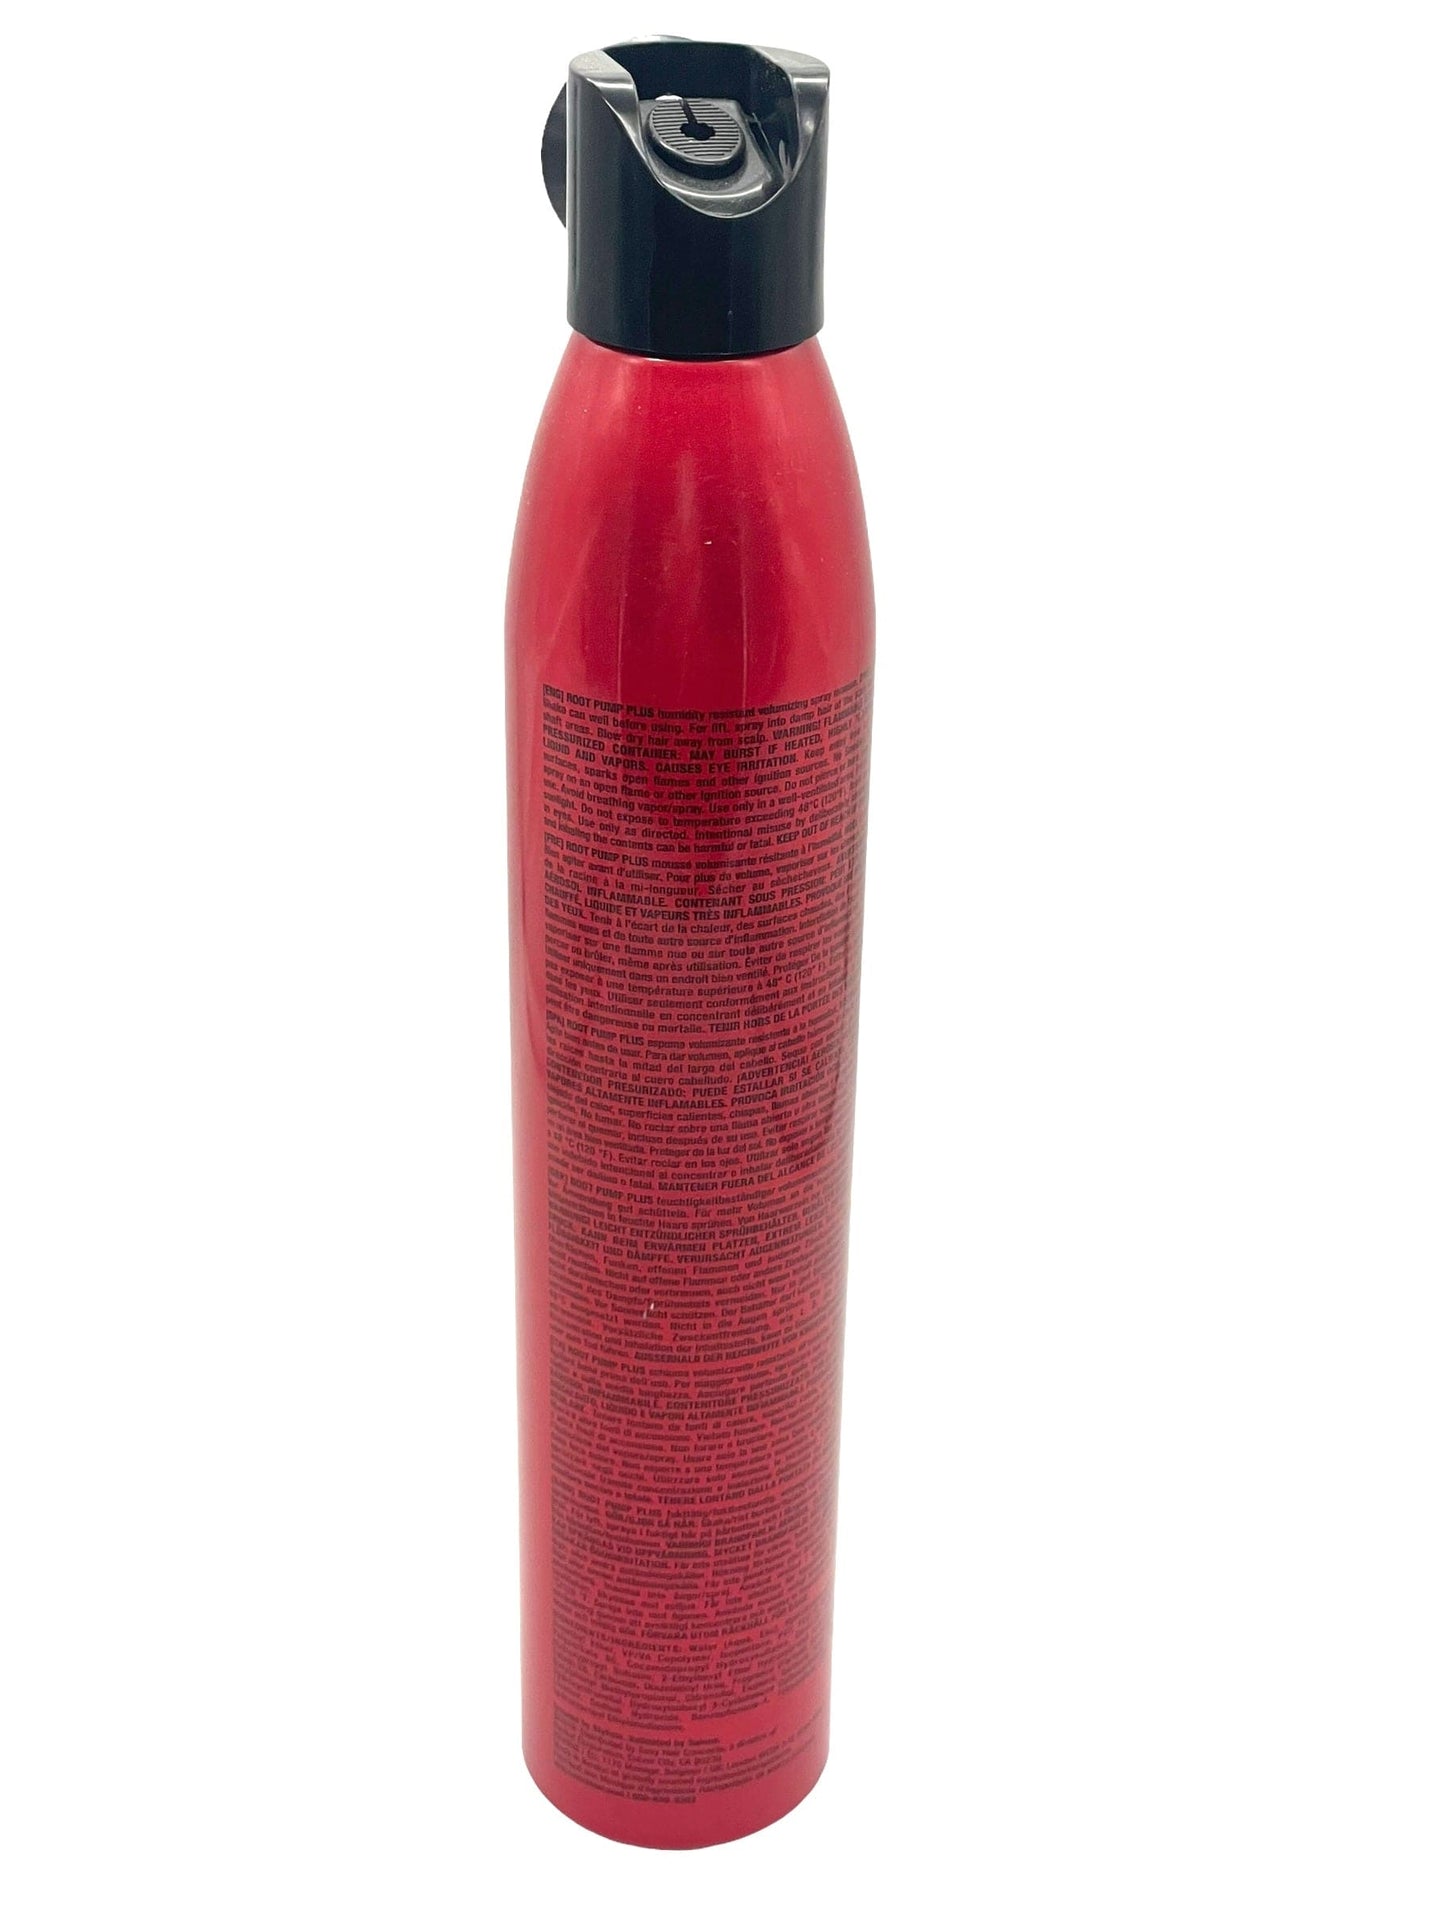 Sexy Hair Big Root Pump Plus Humidity Resistant Volumizing Spray Mousse 10oz Hair Spray